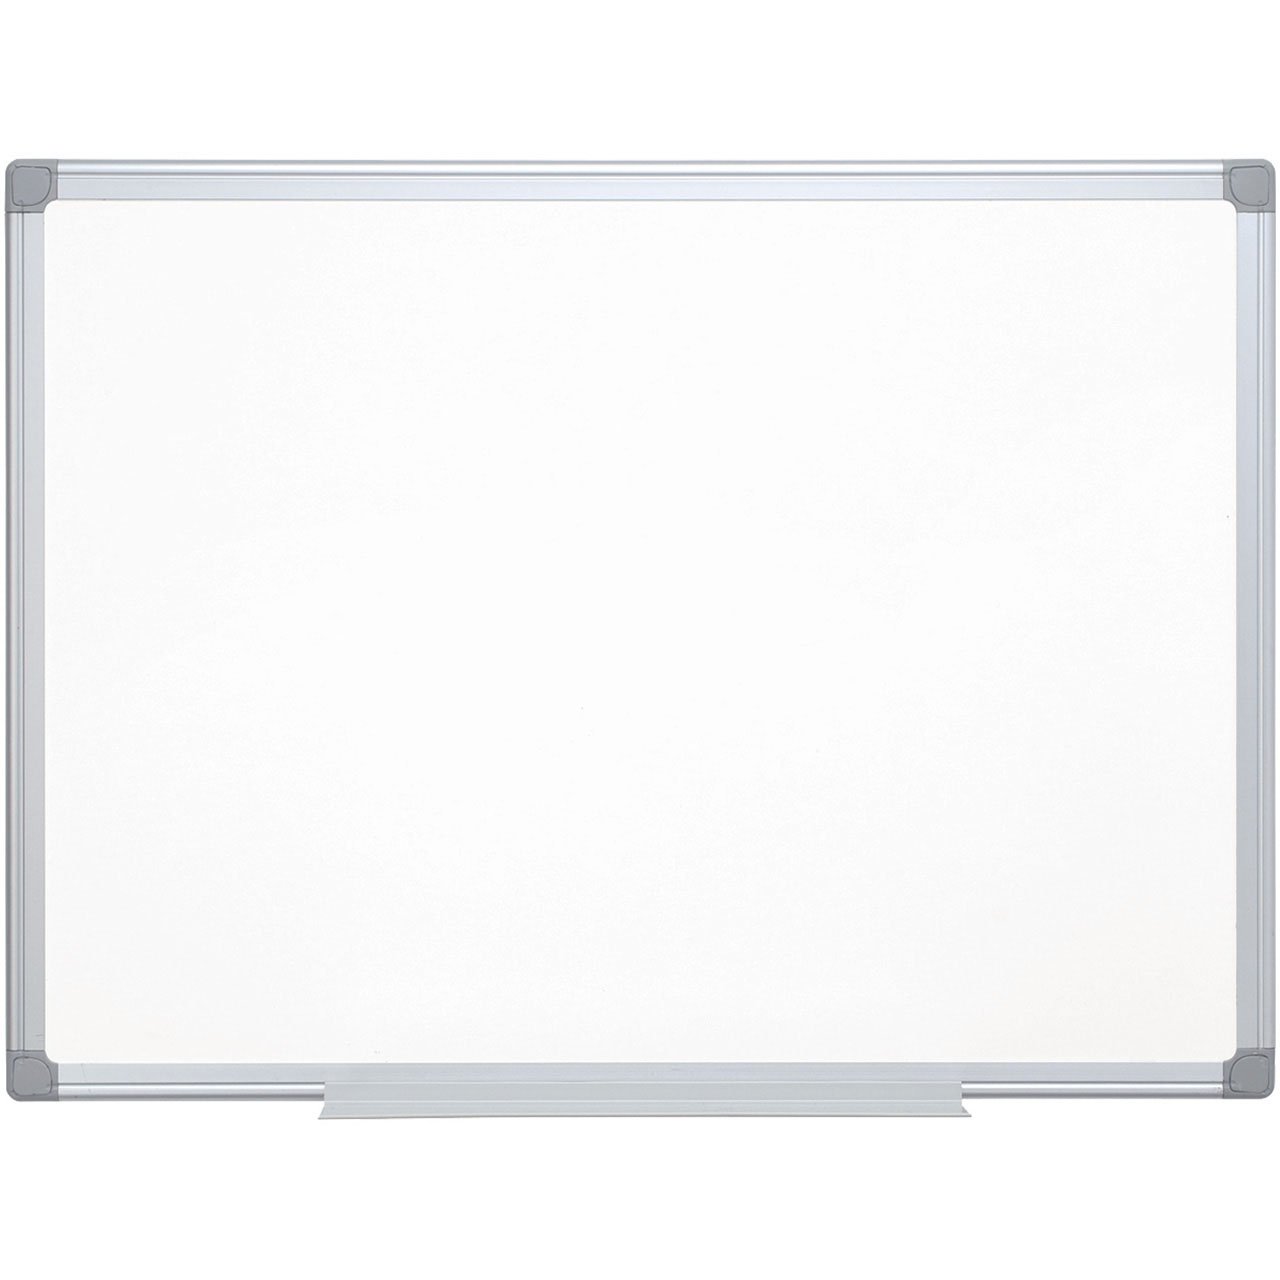 Q-connect lakeret whiteboardtavle 1000 mm x 1500 mm, Stål/Aluminium